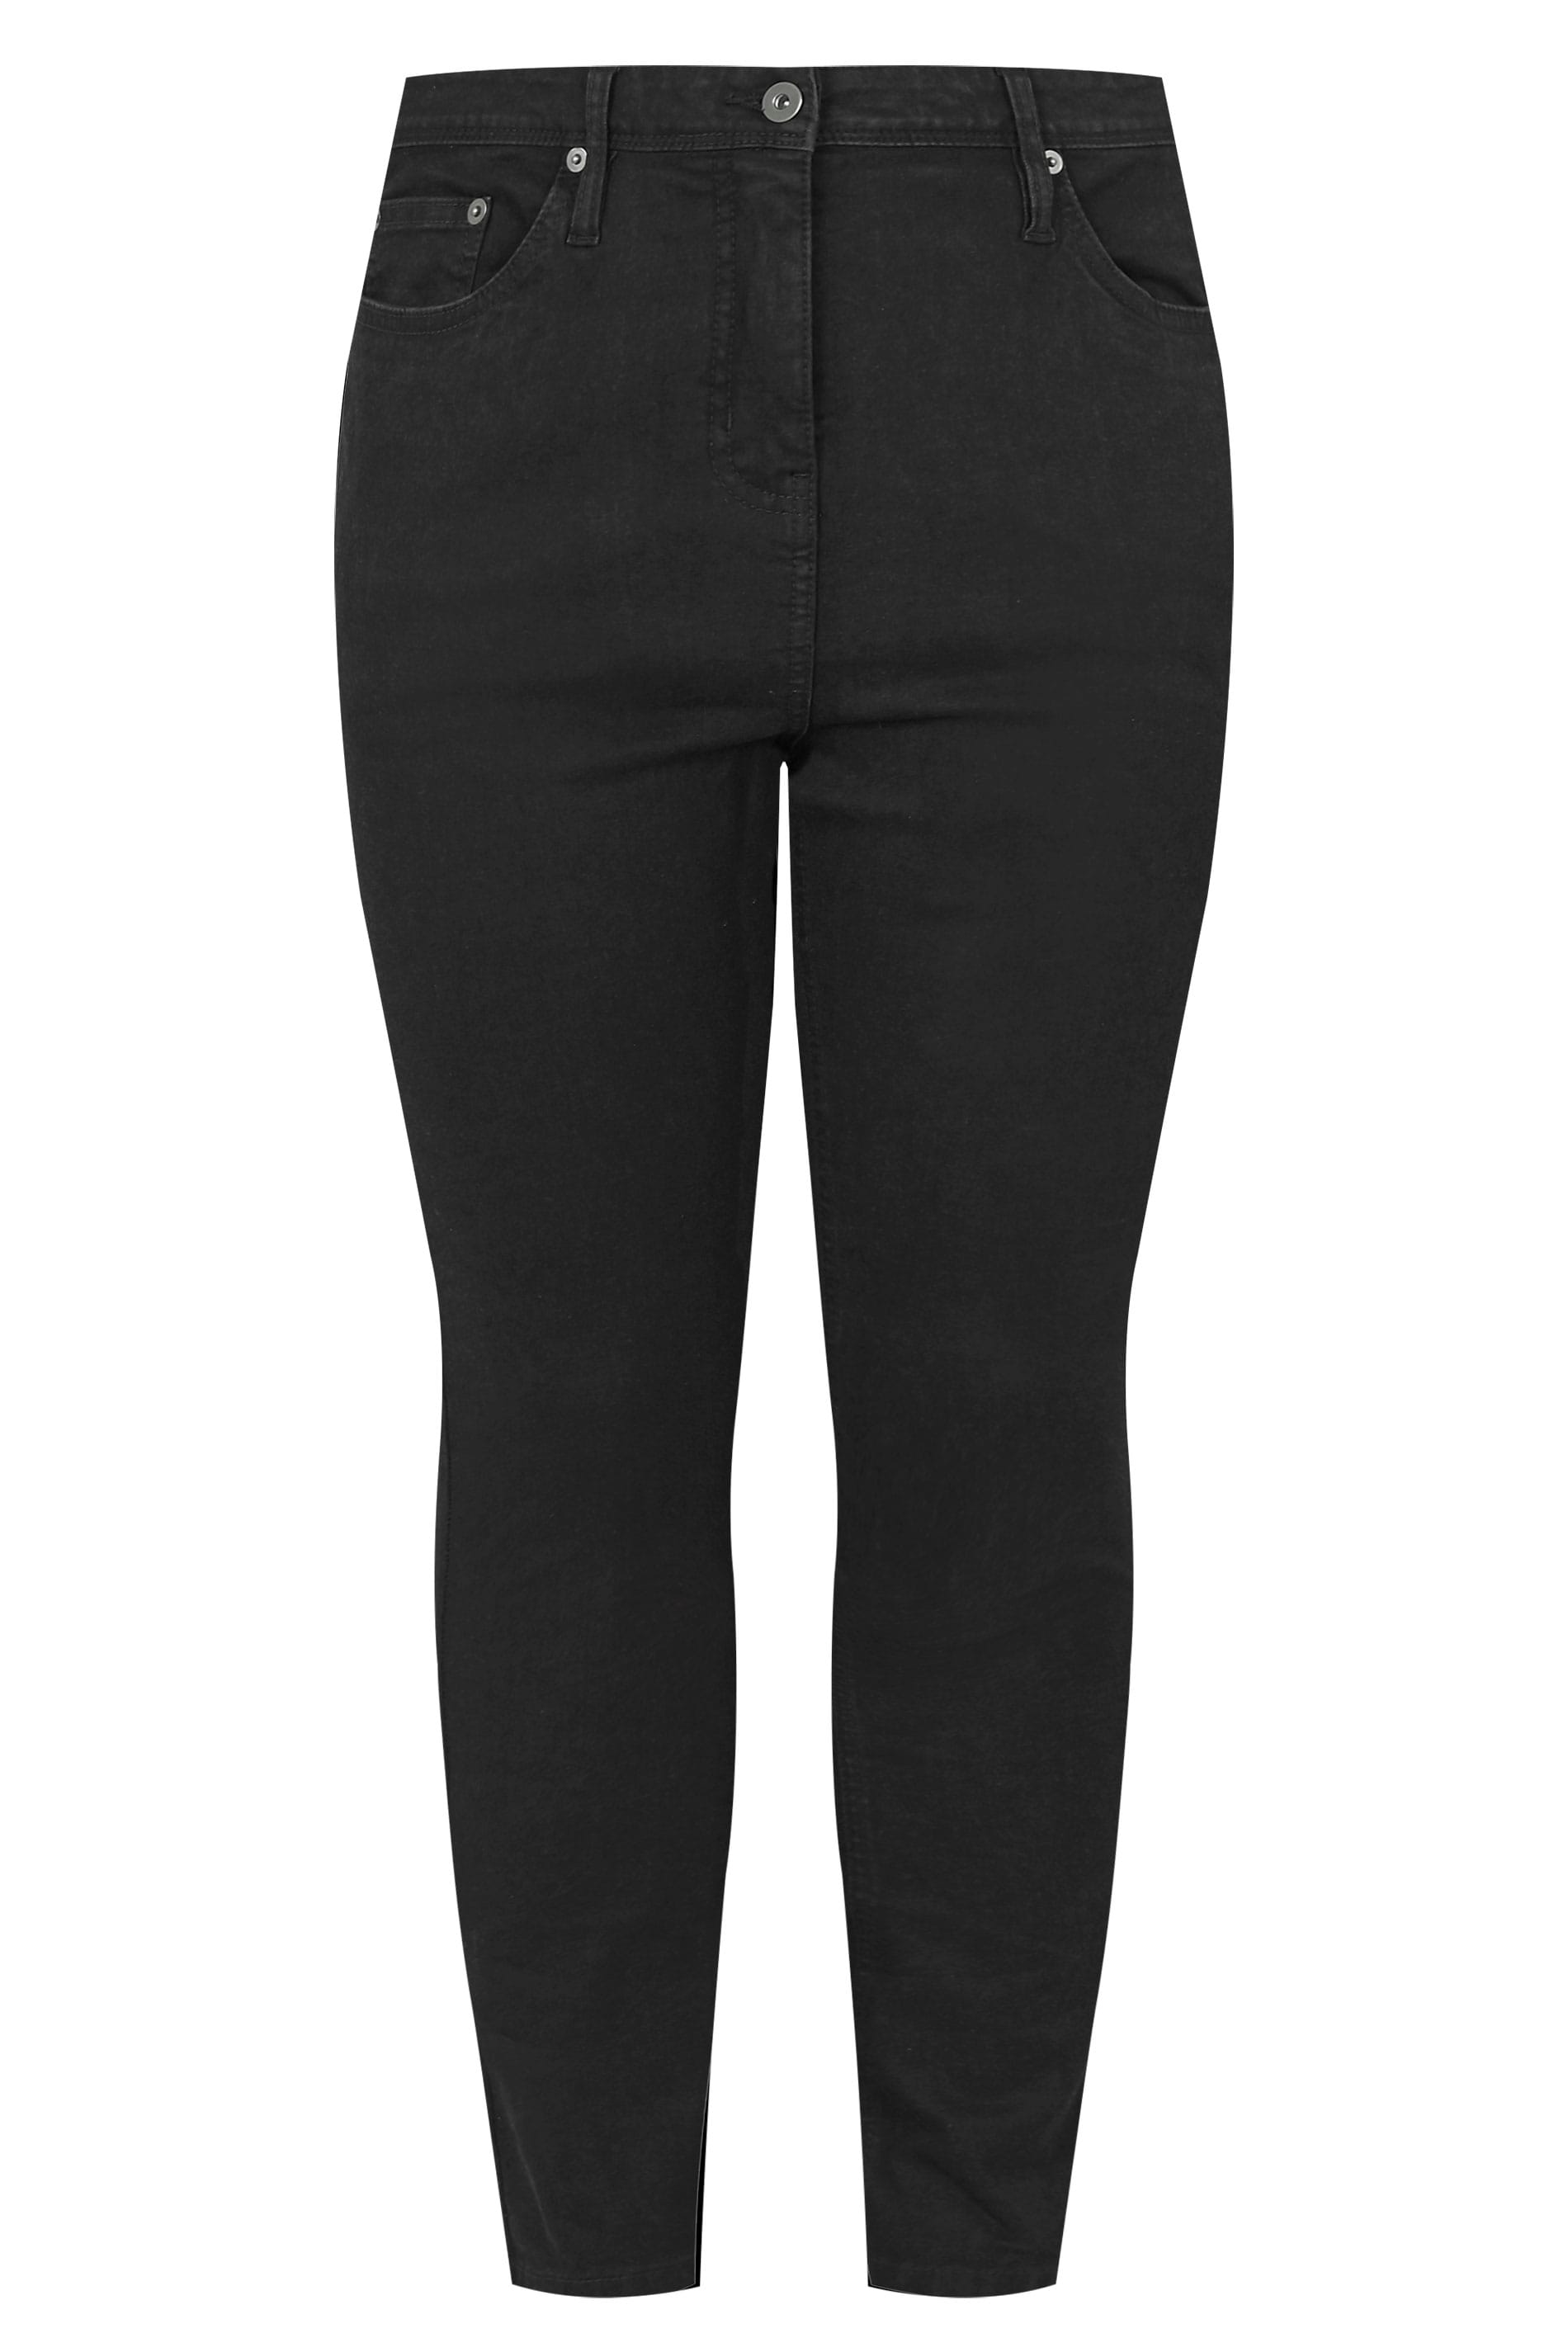 Black 'Luxe Control' Slim Leg Jeans, Plus size 16 to 36